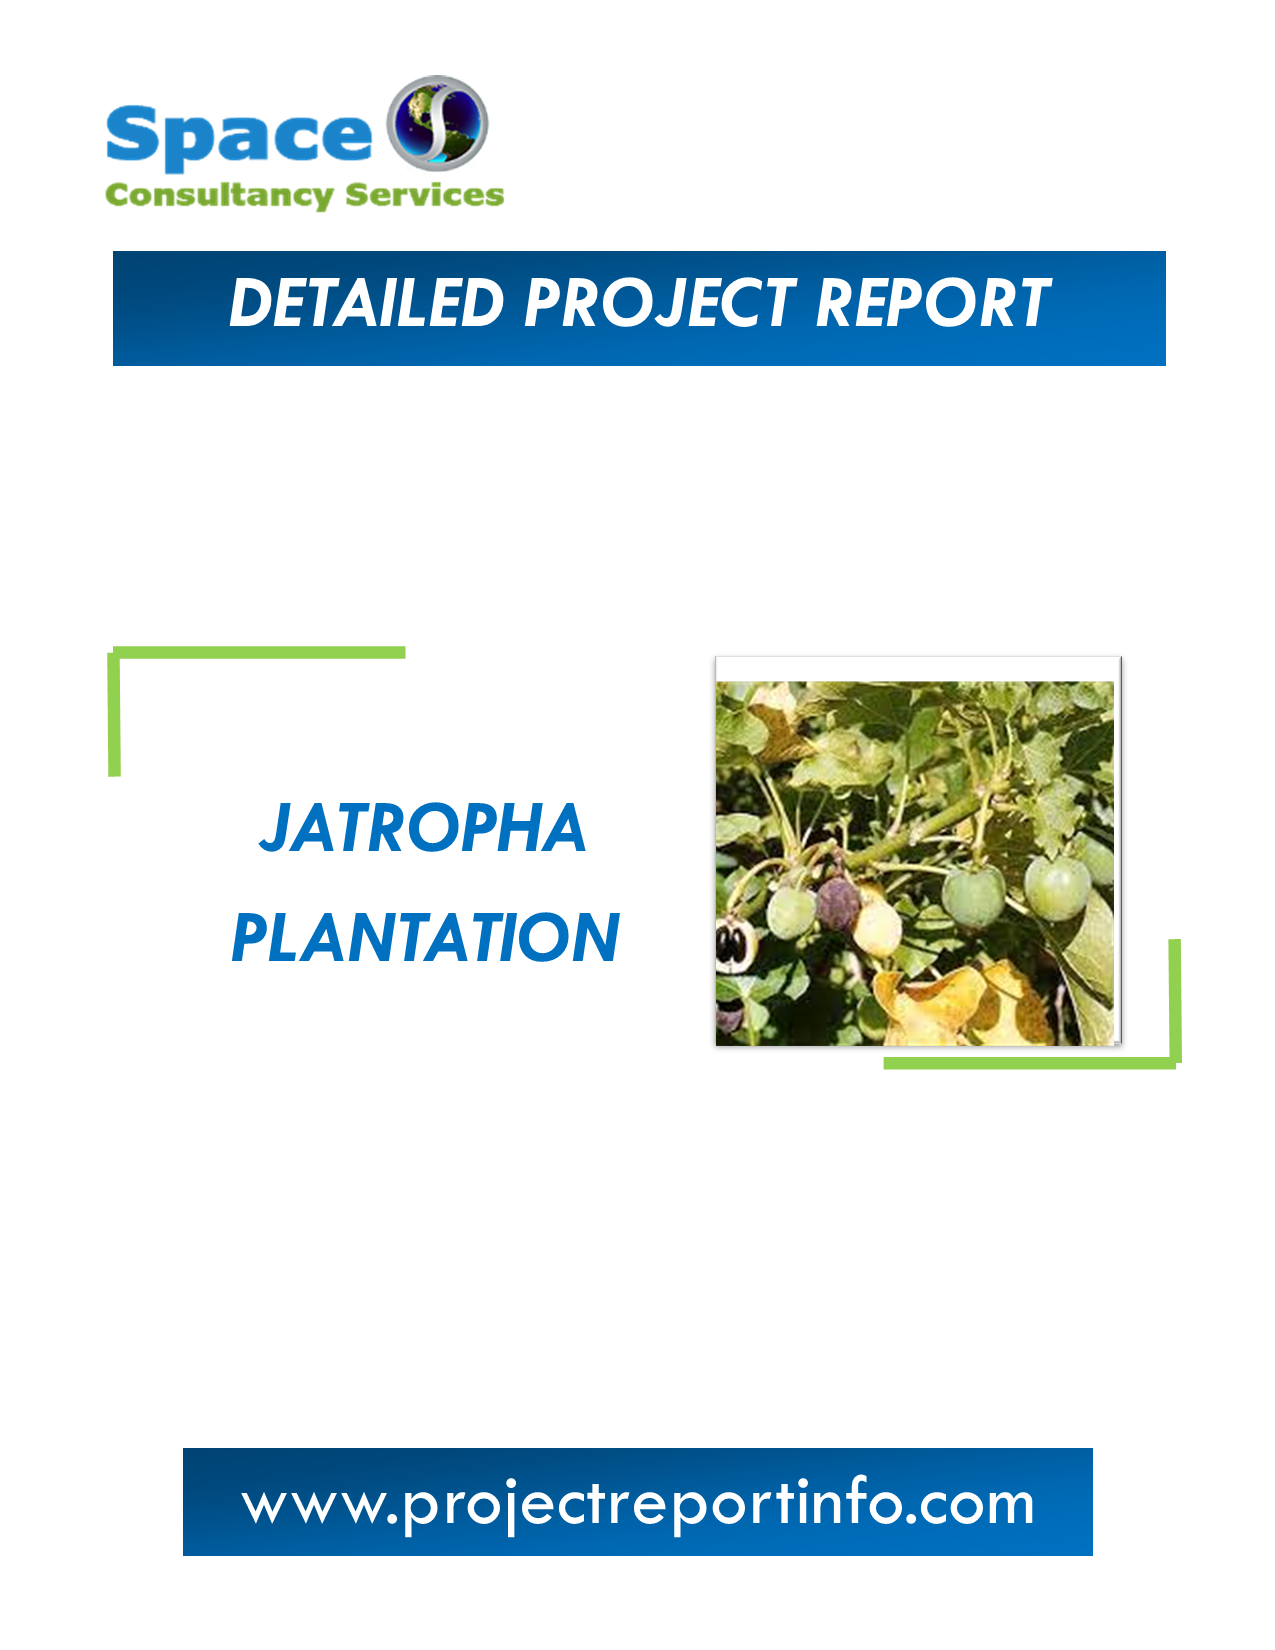 Project Report on Jatropha Plantation